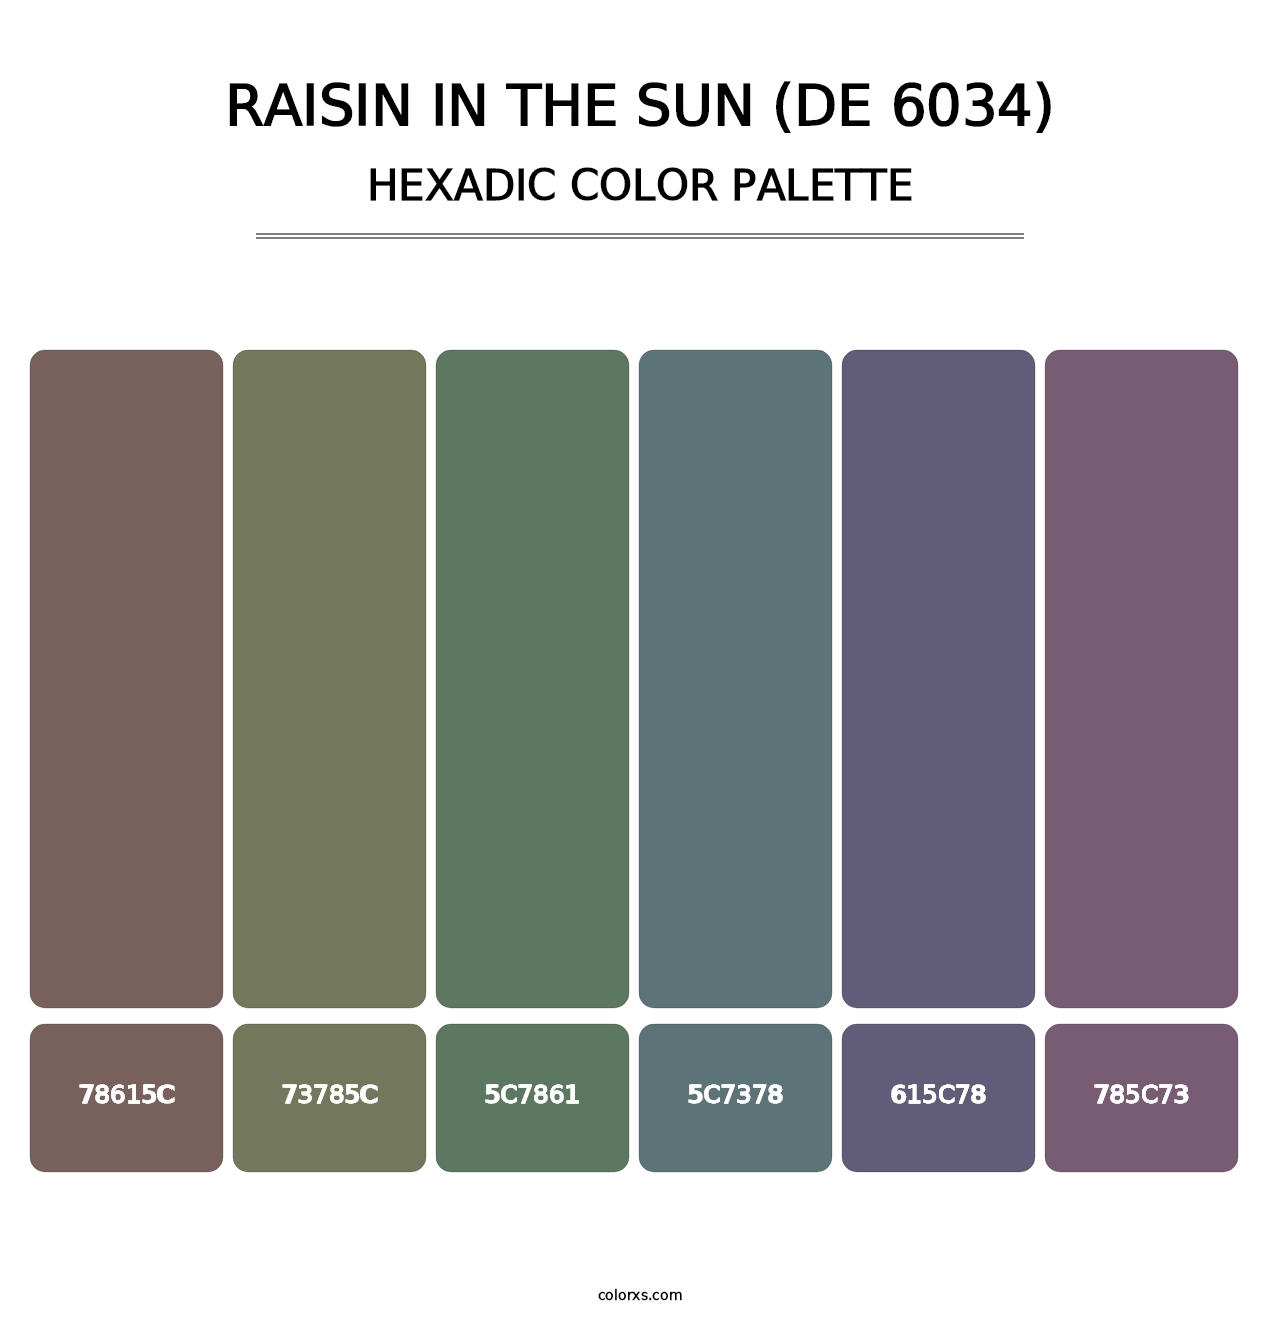 Raisin in the Sun (DE 6034) - Hexadic Color Palette